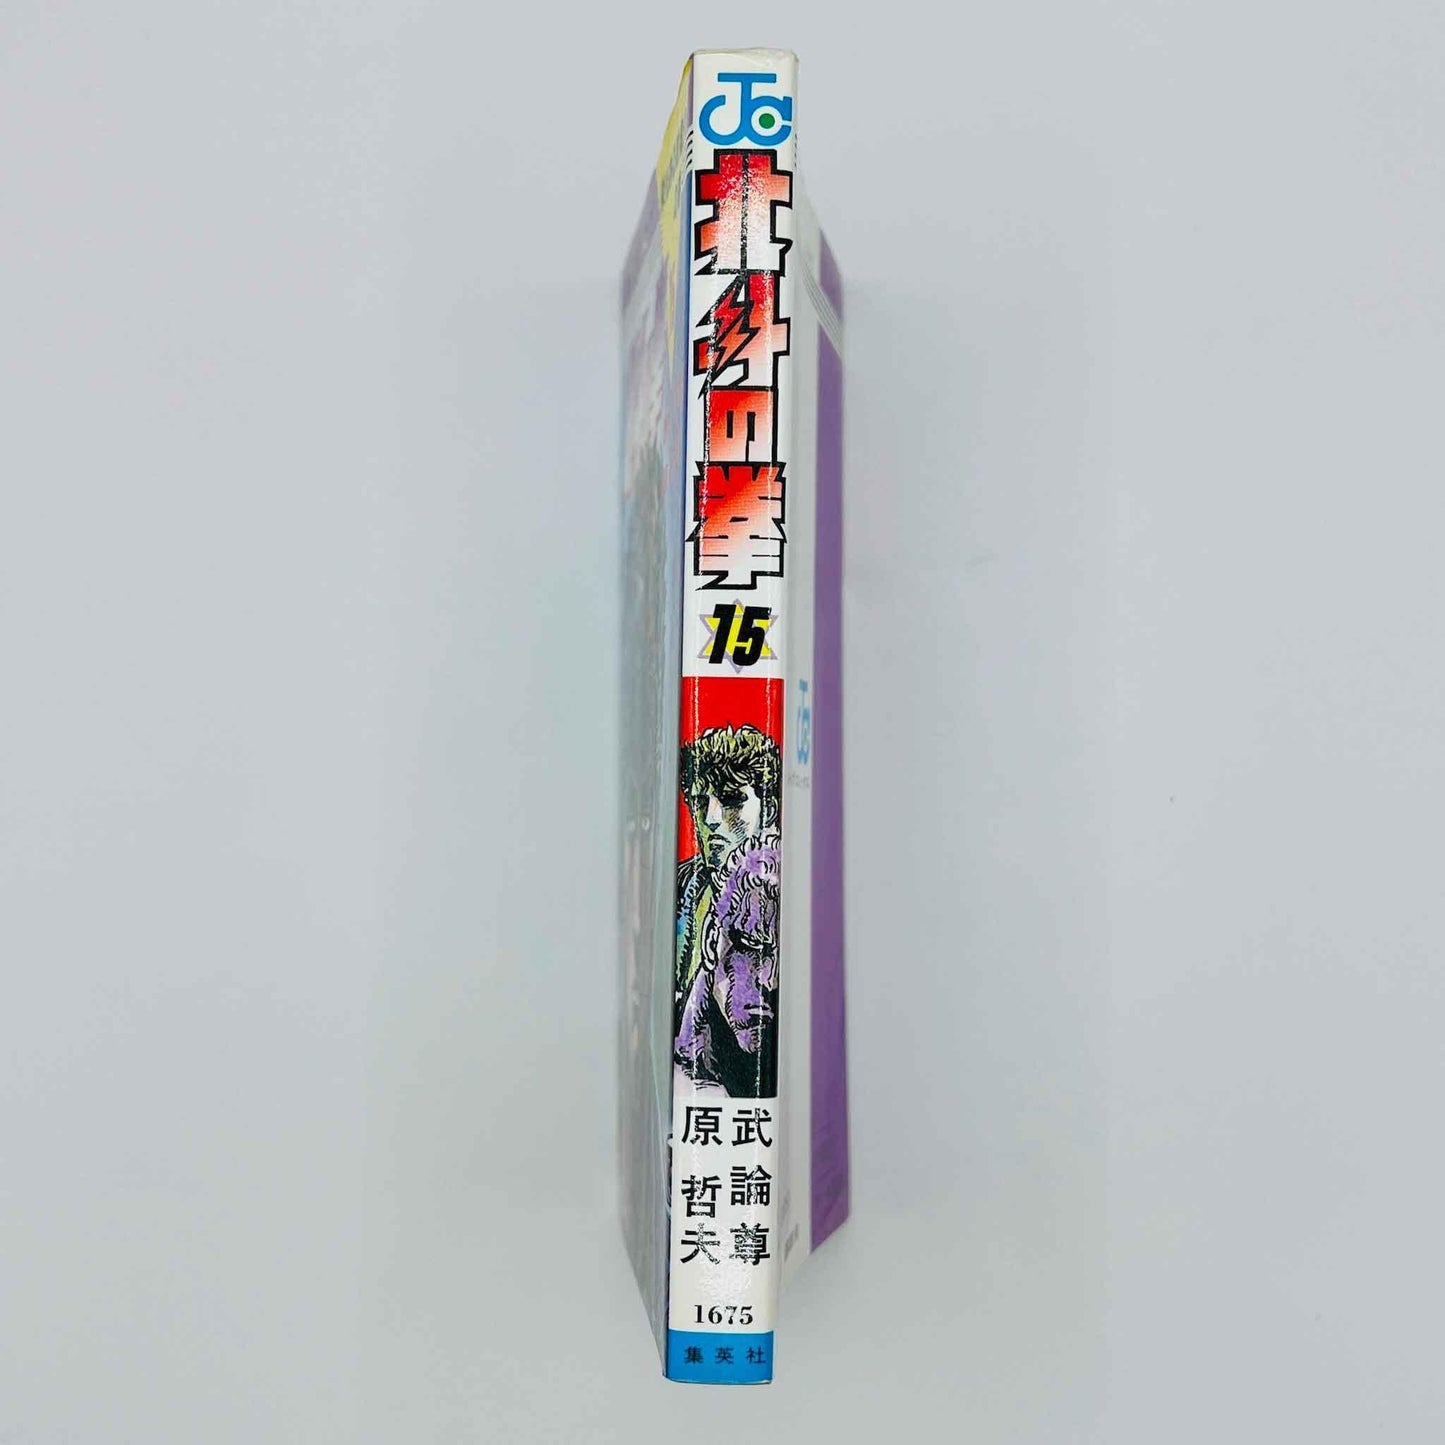 Hokuto no Ken - Volume 15 - 1stPrint.net - 1st First Print Edition Manga Store - M-HNK-15-001